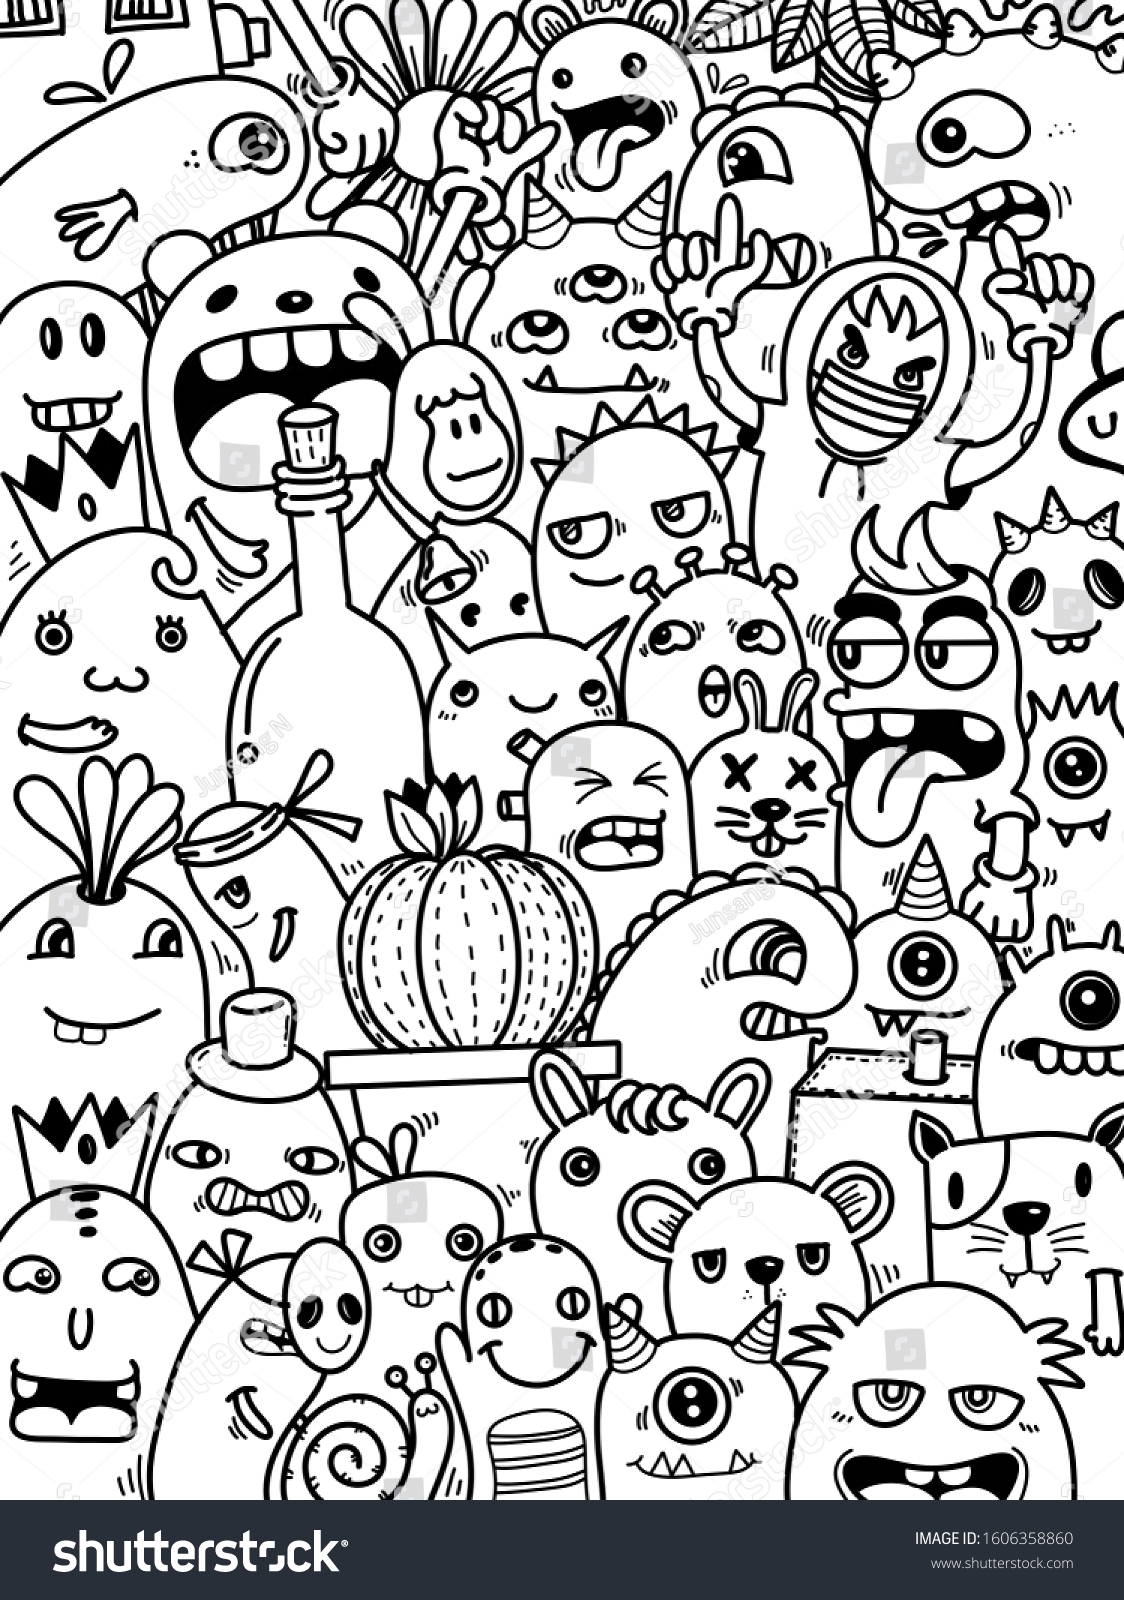 Handdrawn Illustrations Monsters Doodle Hand Drawn Stock Illustration ...